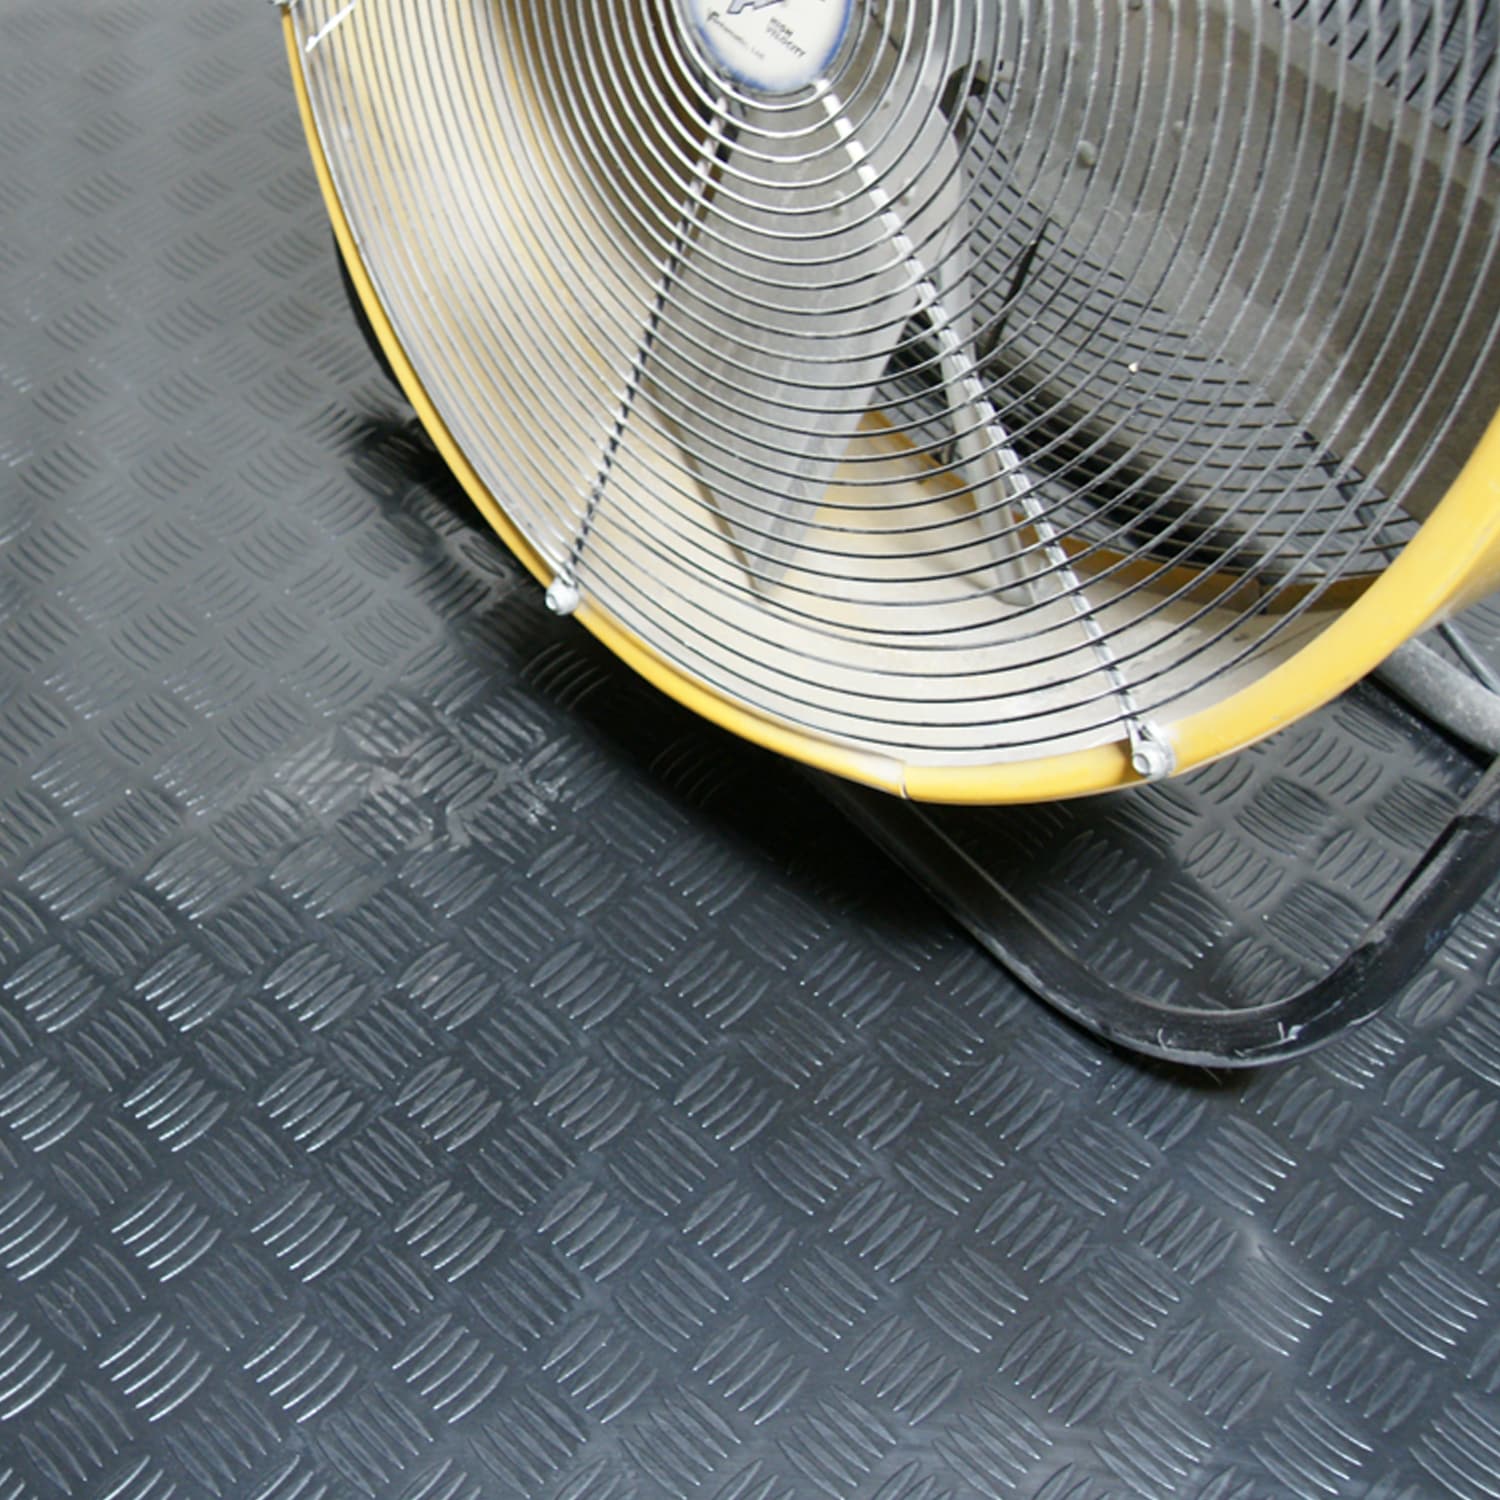 Rubber-Cal Diamond-Grip Resilient Rubber Flooring Rolls - Black 480 x 48 x 0.08 in.